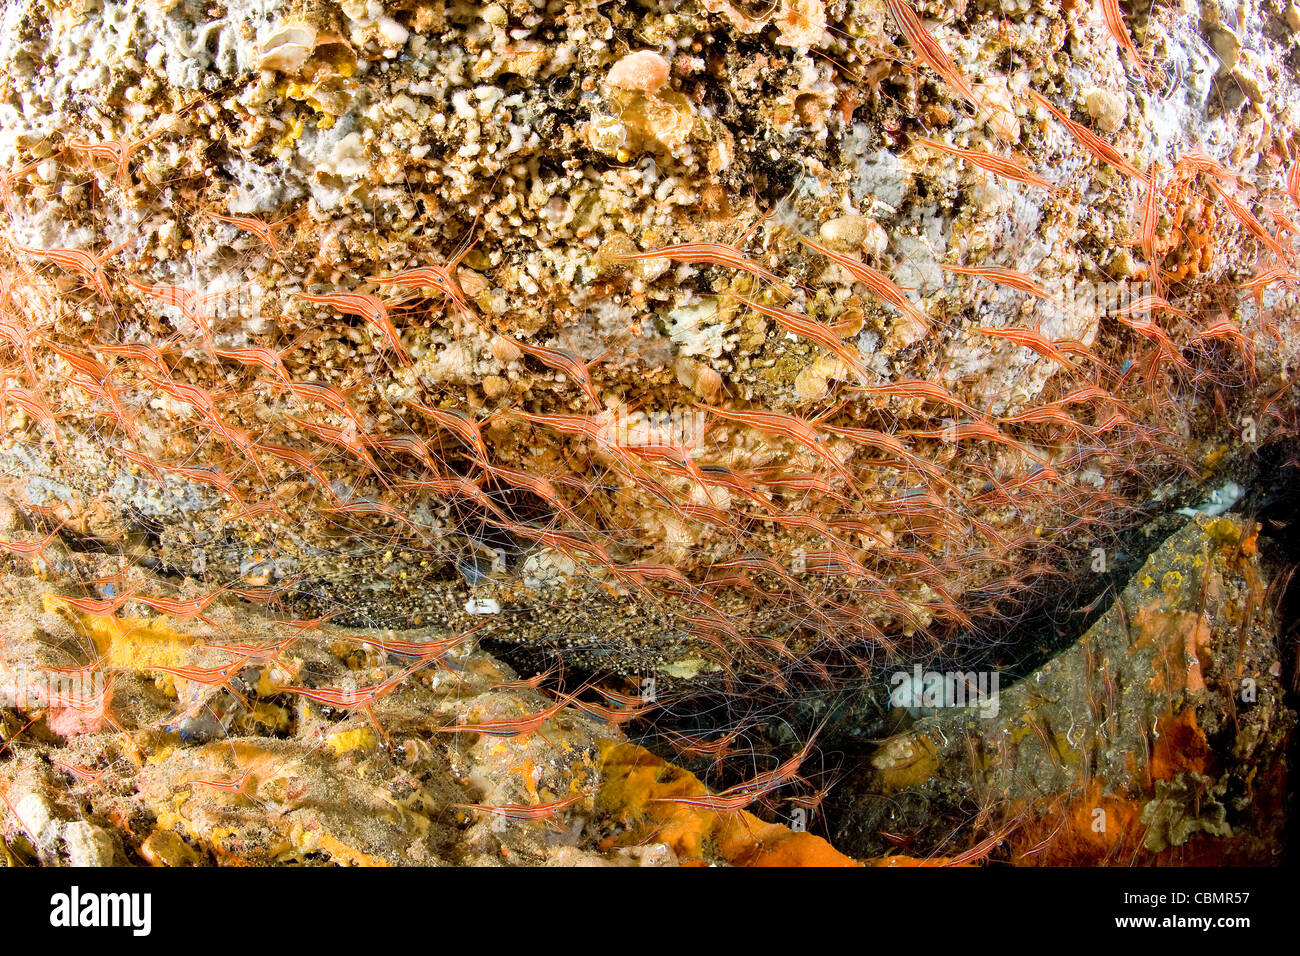 Narwal Shrimp in Cave, Plesionika narval, Ischia, Mediterranean Sea, Italy Stock Photo